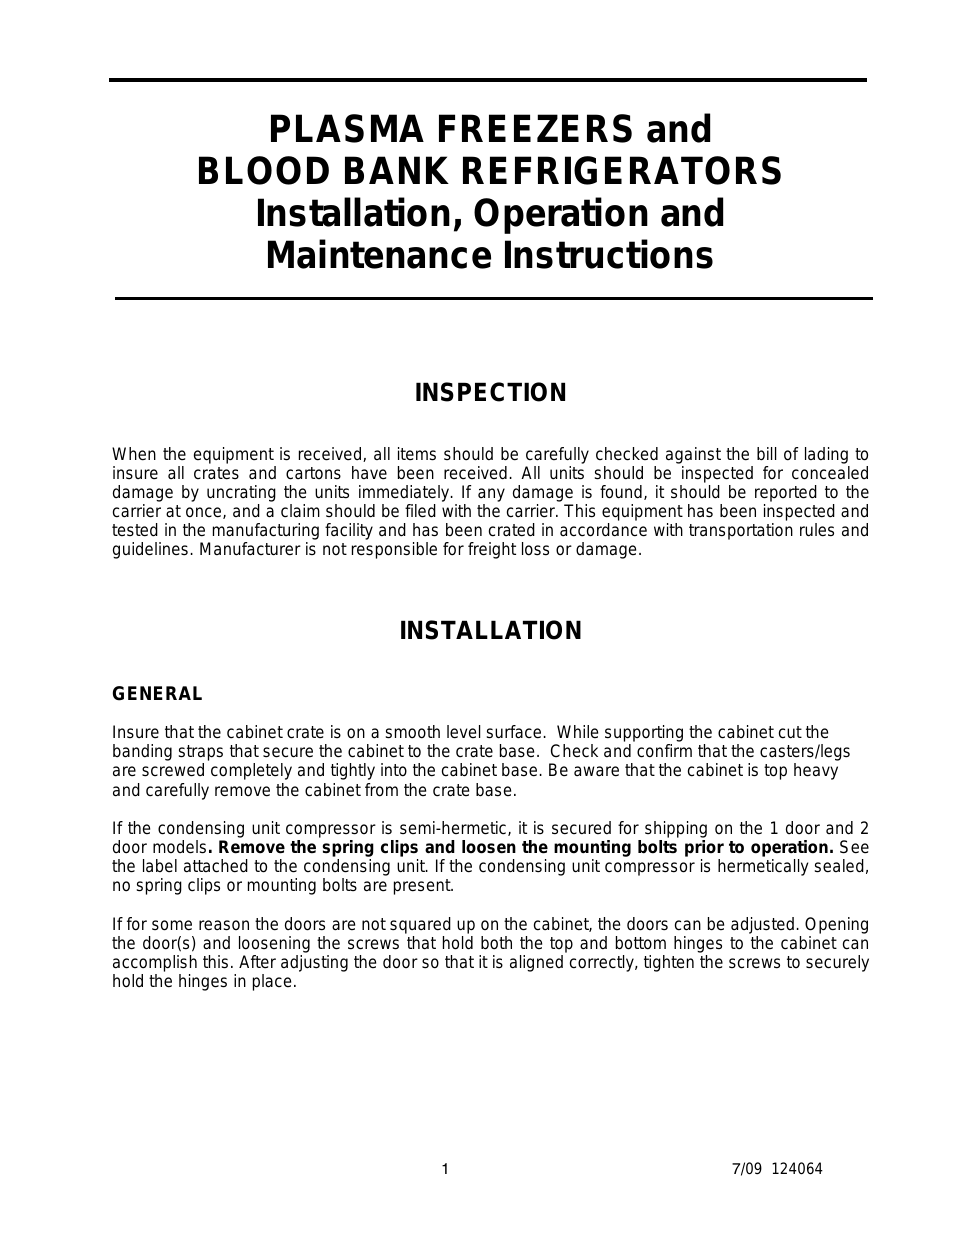 Plasma Freezers & Blood Bank Refrigerators